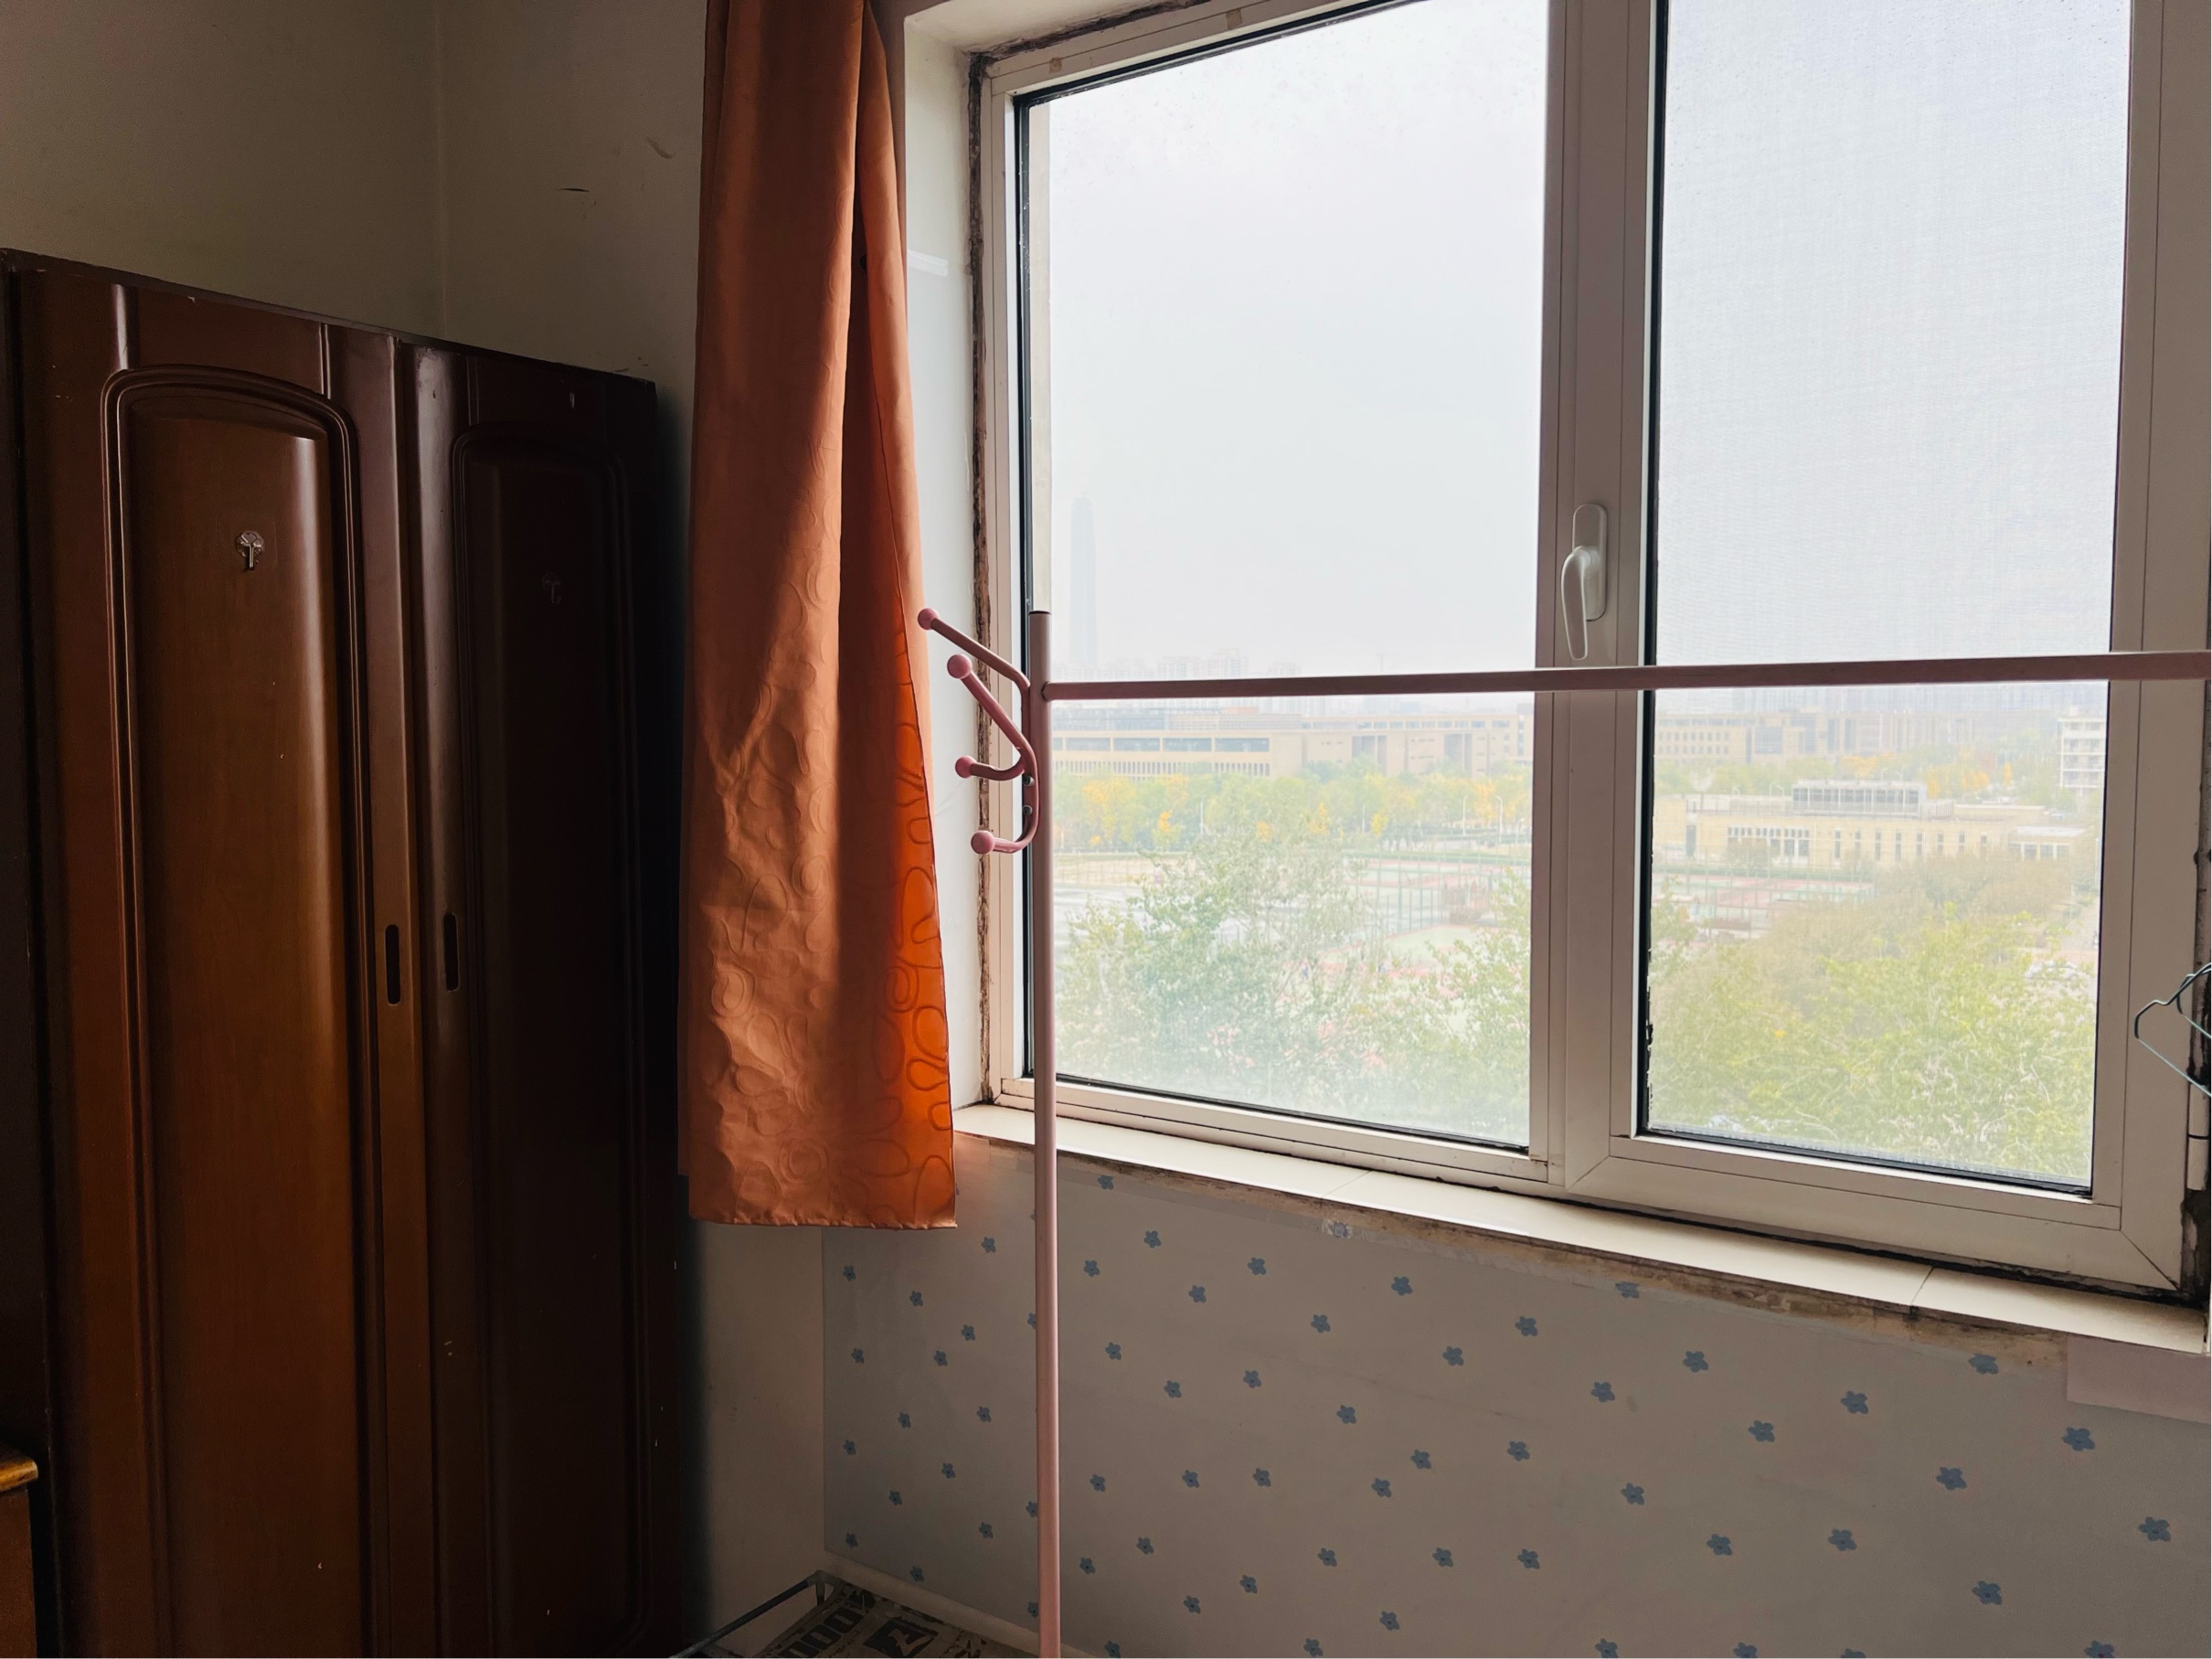 Tianjin-Xiqing-Cozy Home,Clean&Comfy,No Gender Limit,LGBTQ Friendly